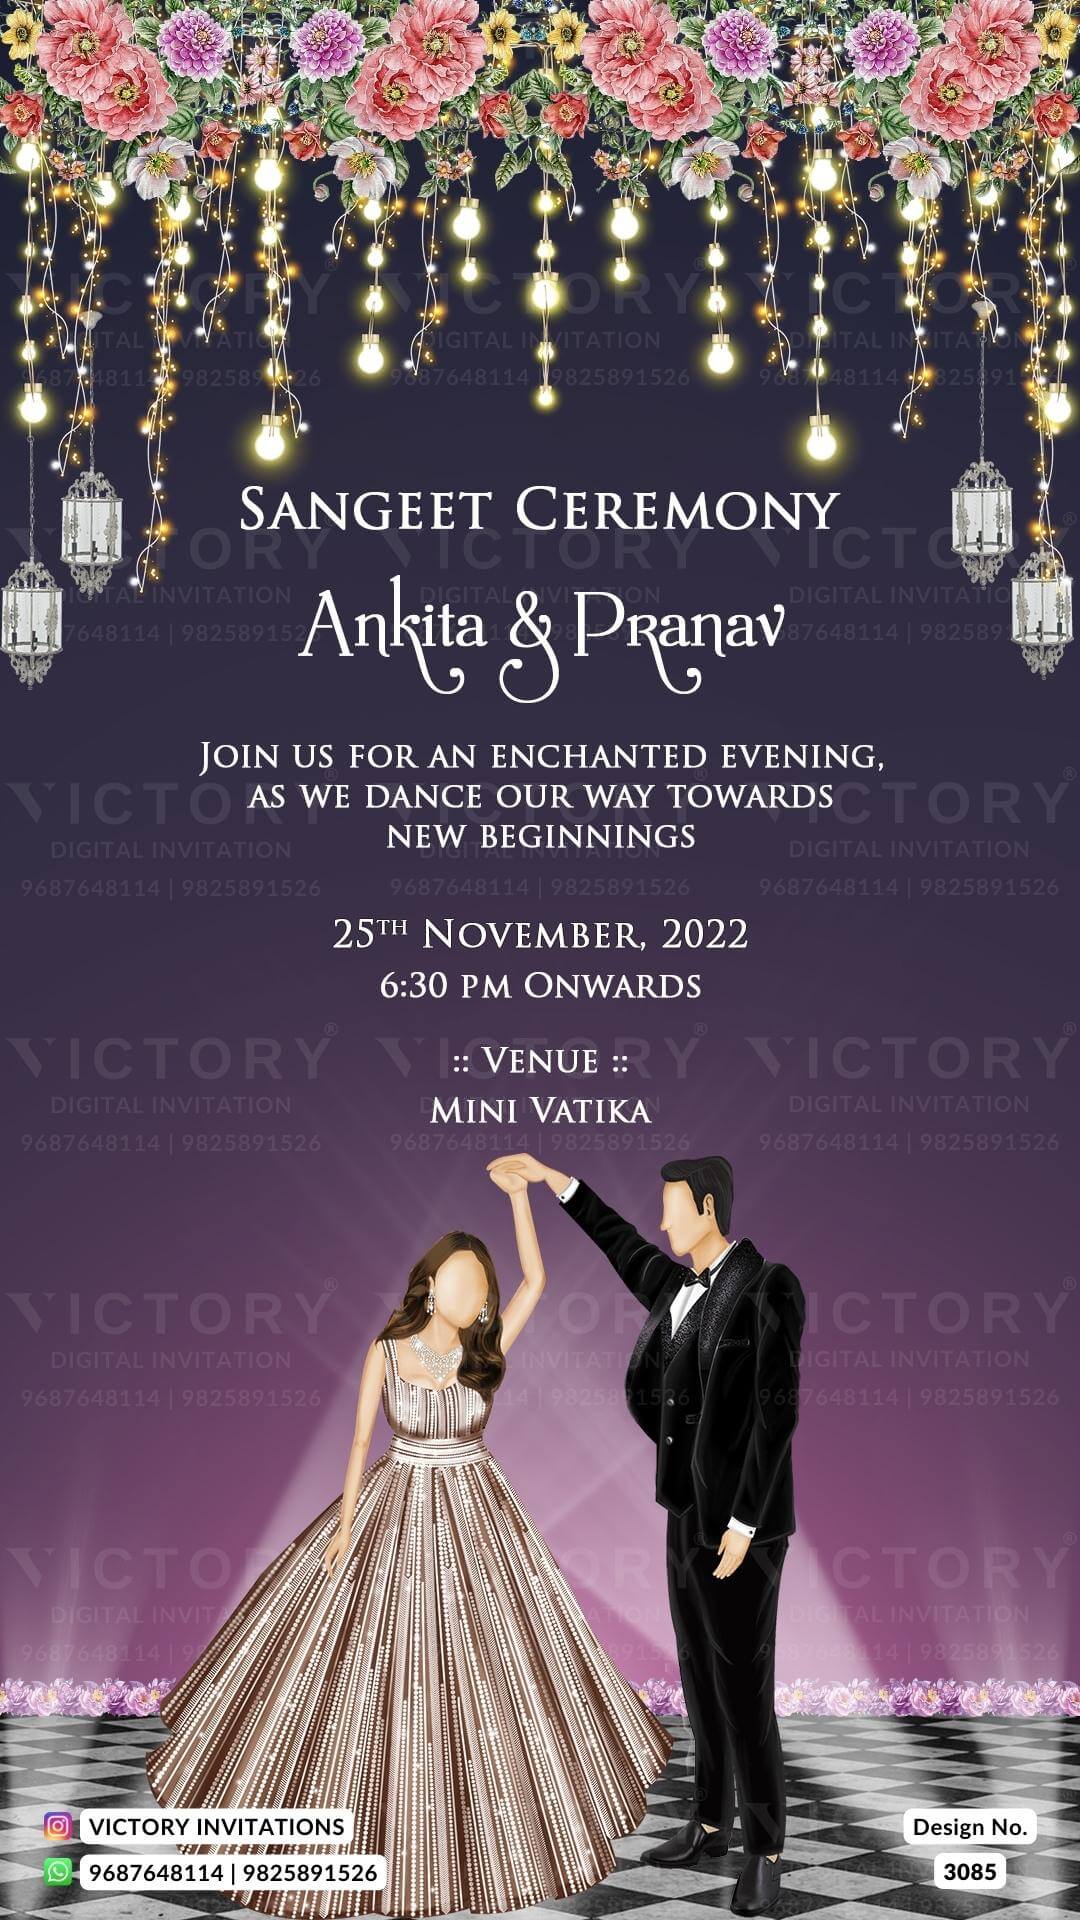 Sangeet Ceremony digital invitation card design no.3085